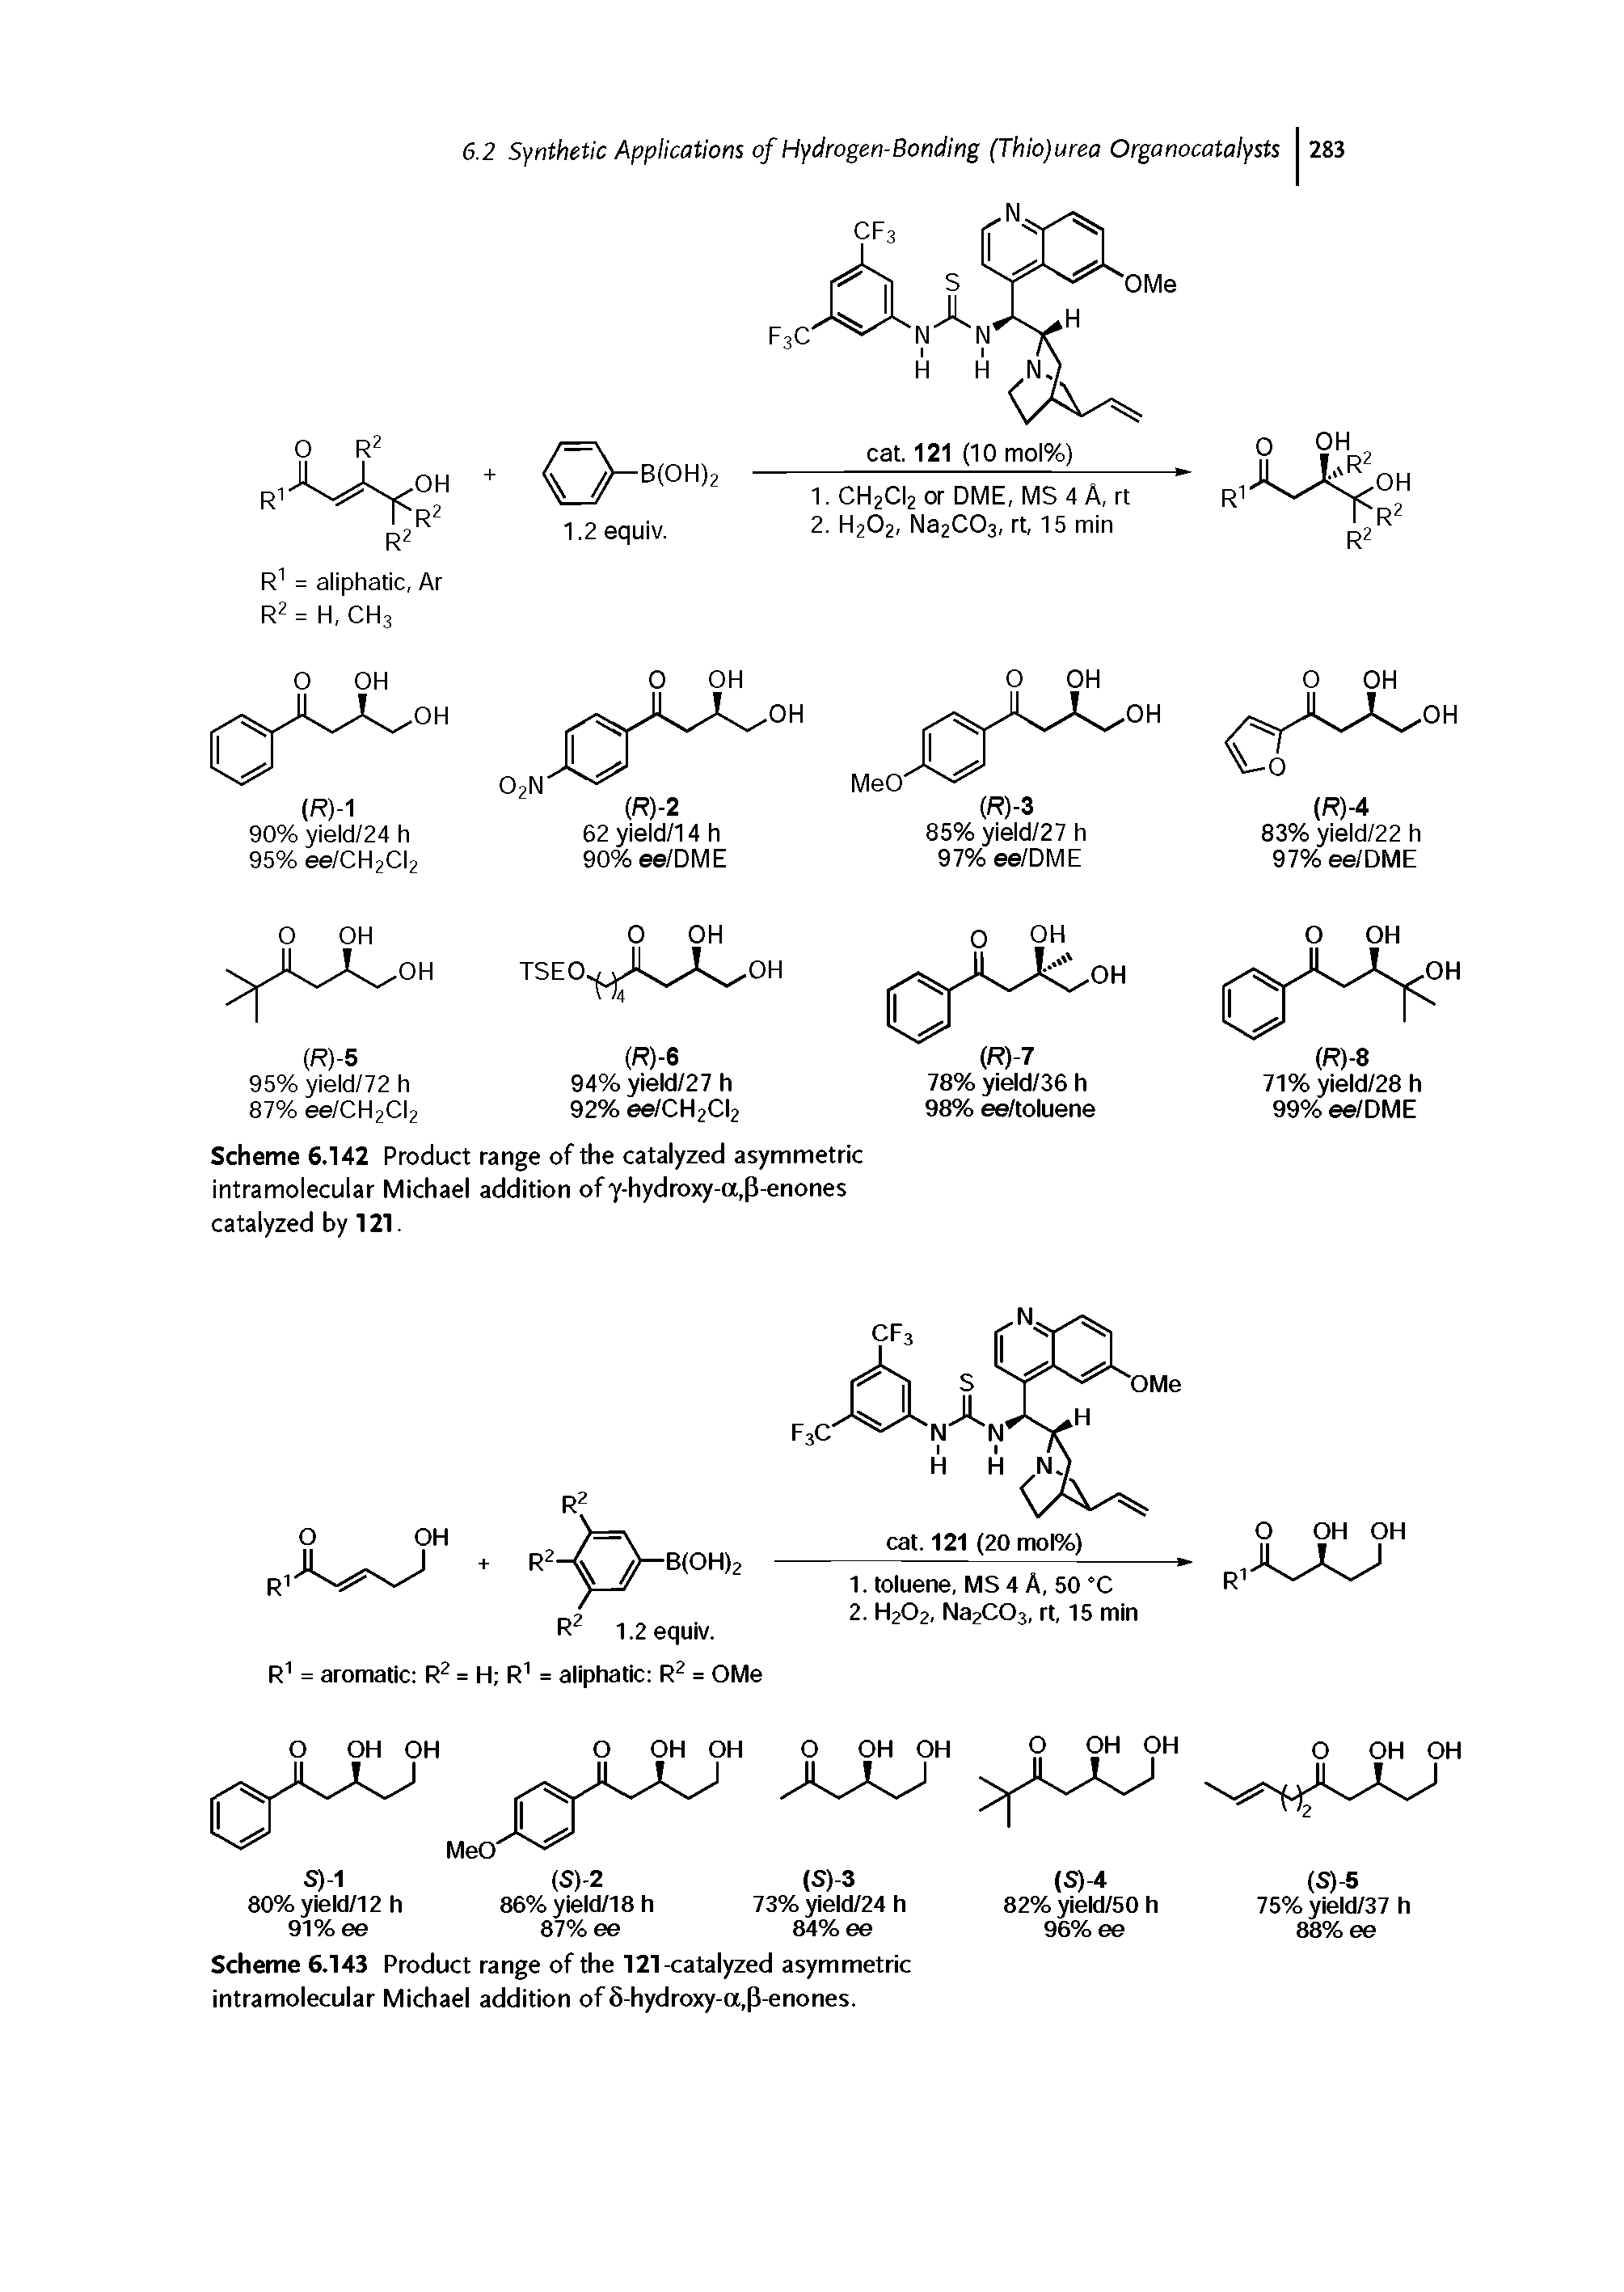 Scheme 6.142 Product range of the catalyzed asymmetric intramolecular Michael addition of y-hydroxy-a,P-enones catalyzed by 121.